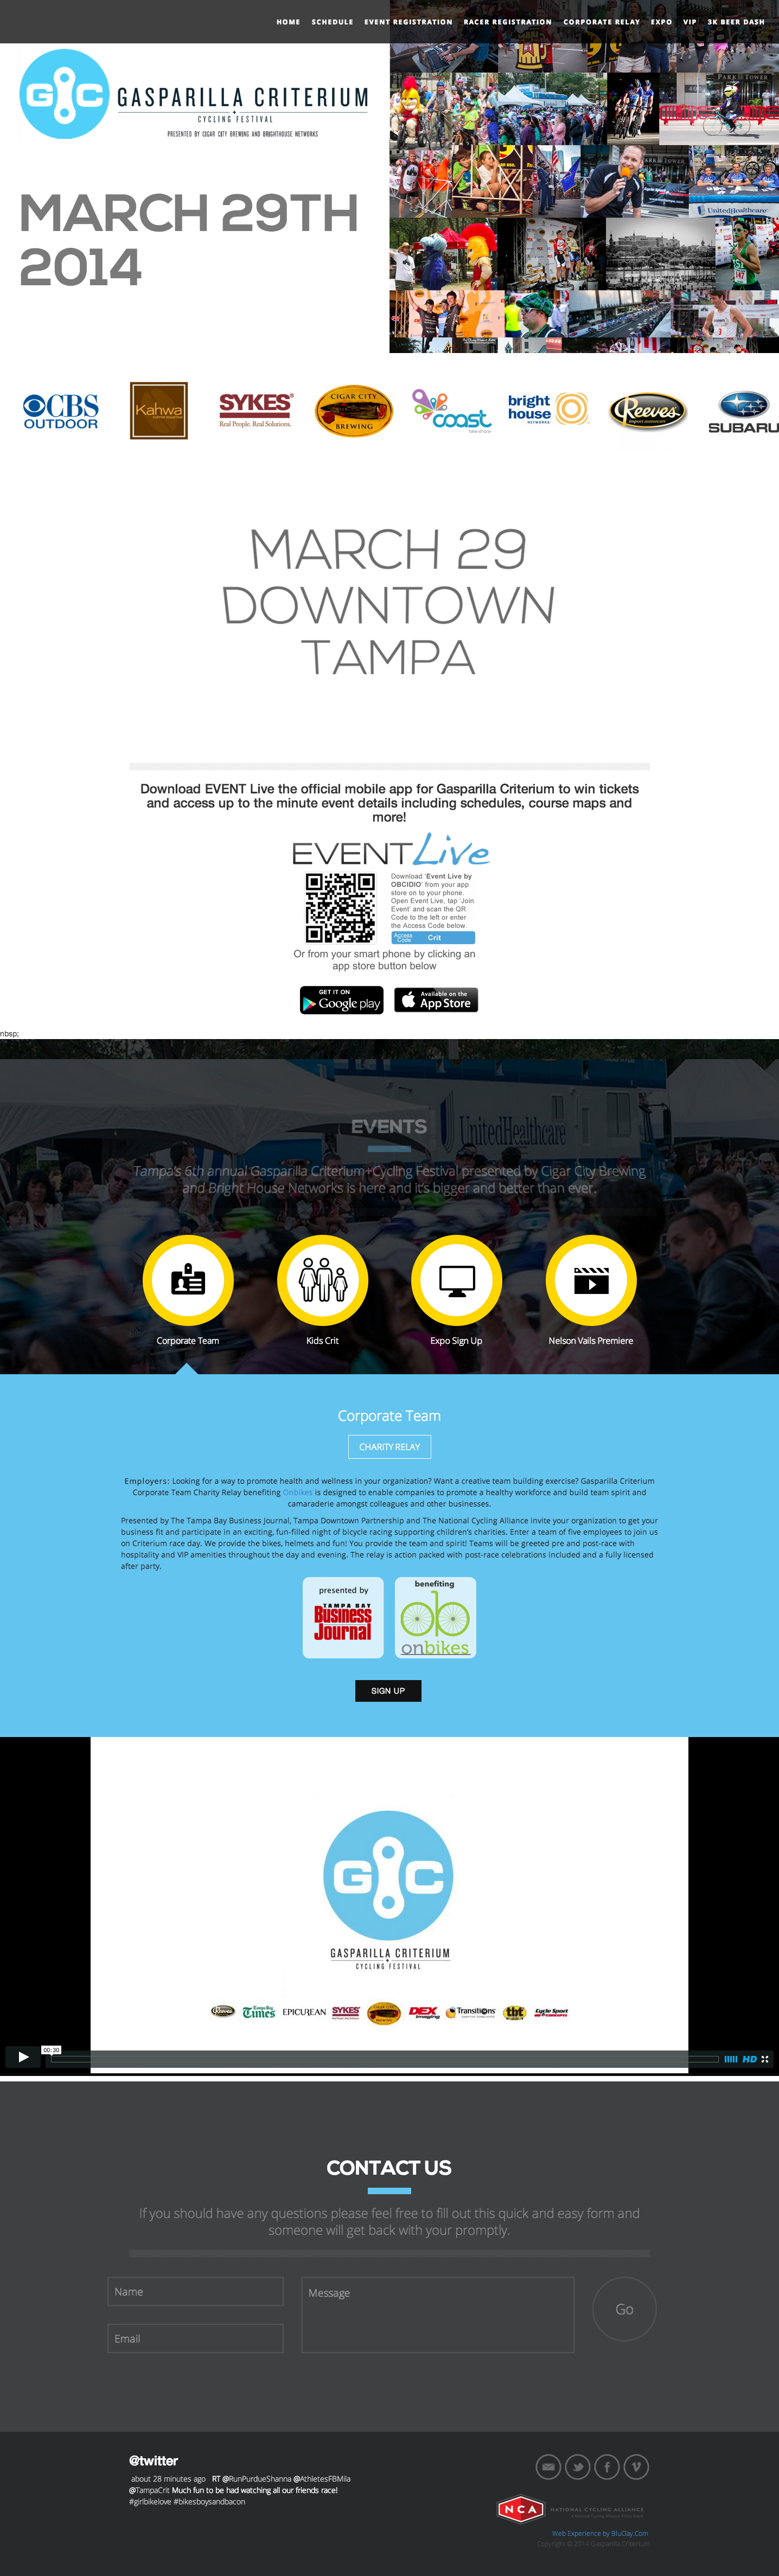 Gasparilla Criterium website designed by BluClay